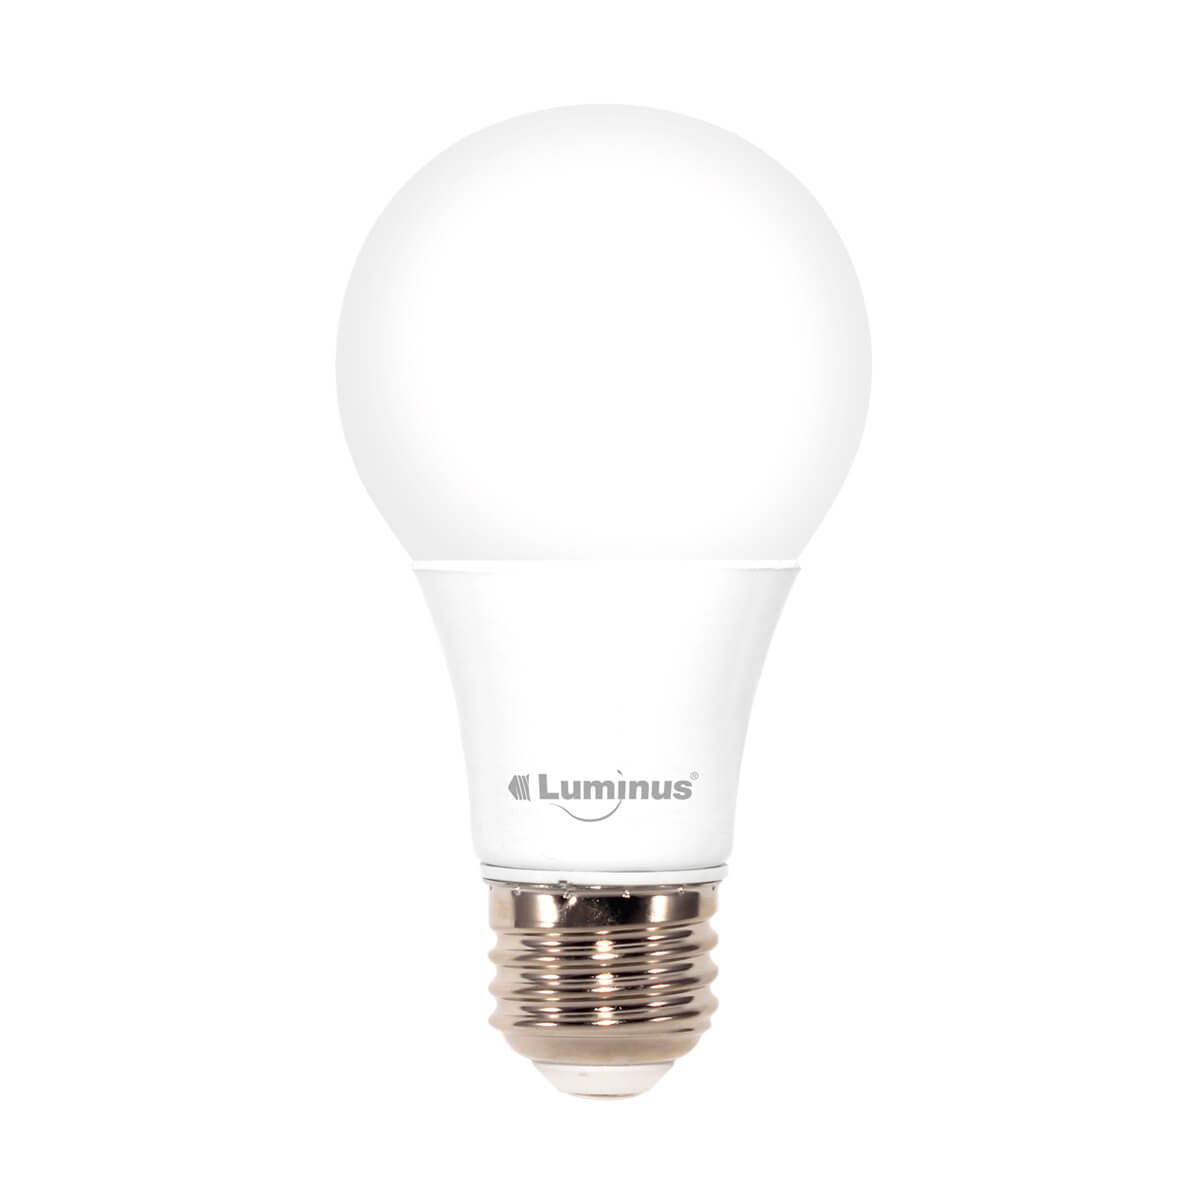 Luminus LED 9W 5000K A19 ND - 2 Pack